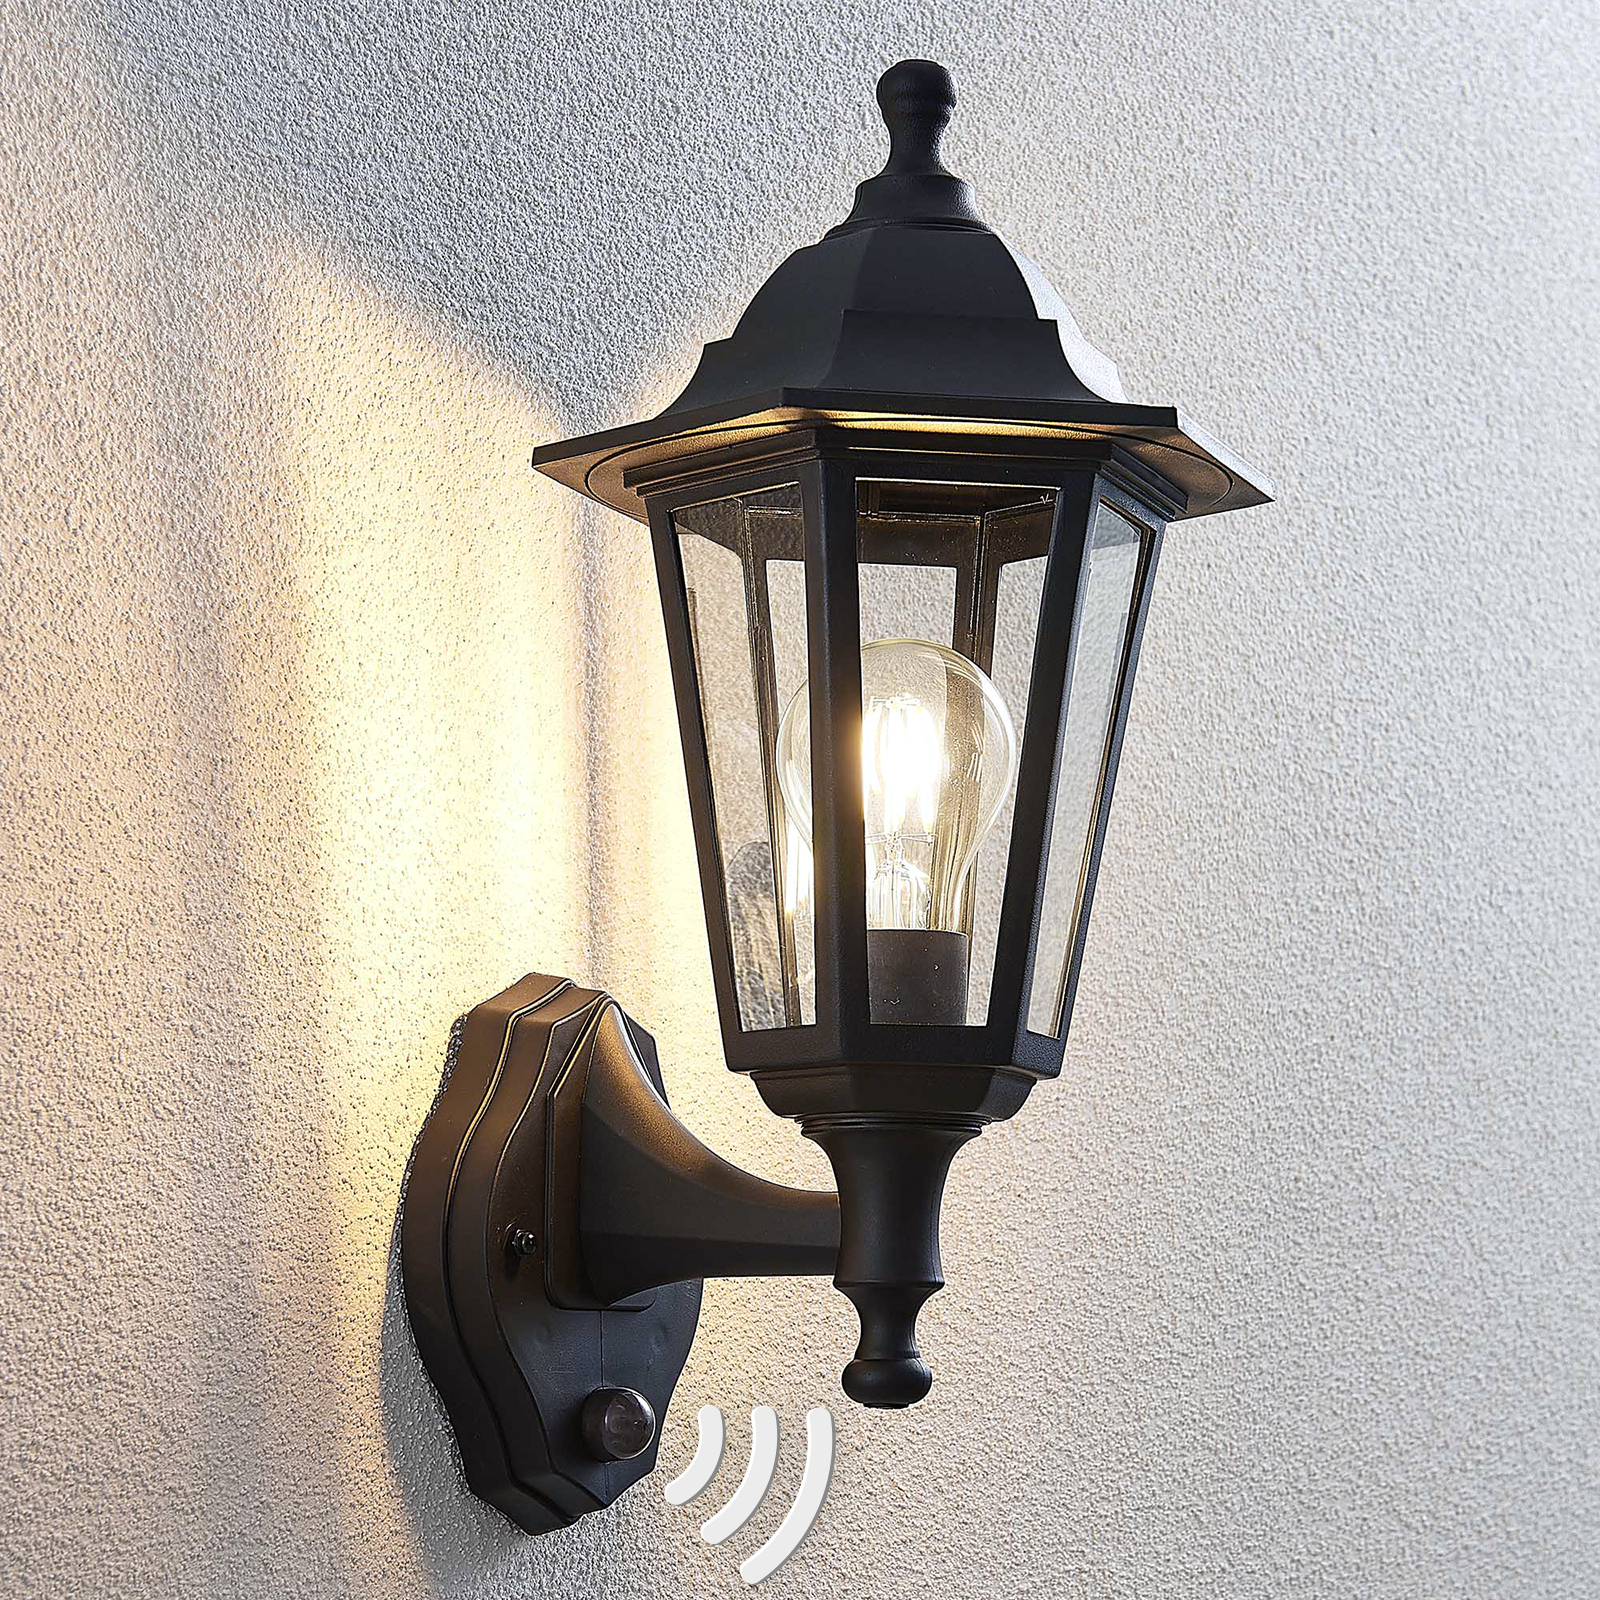 Nane outdoor wall light lantern shape, with sensor